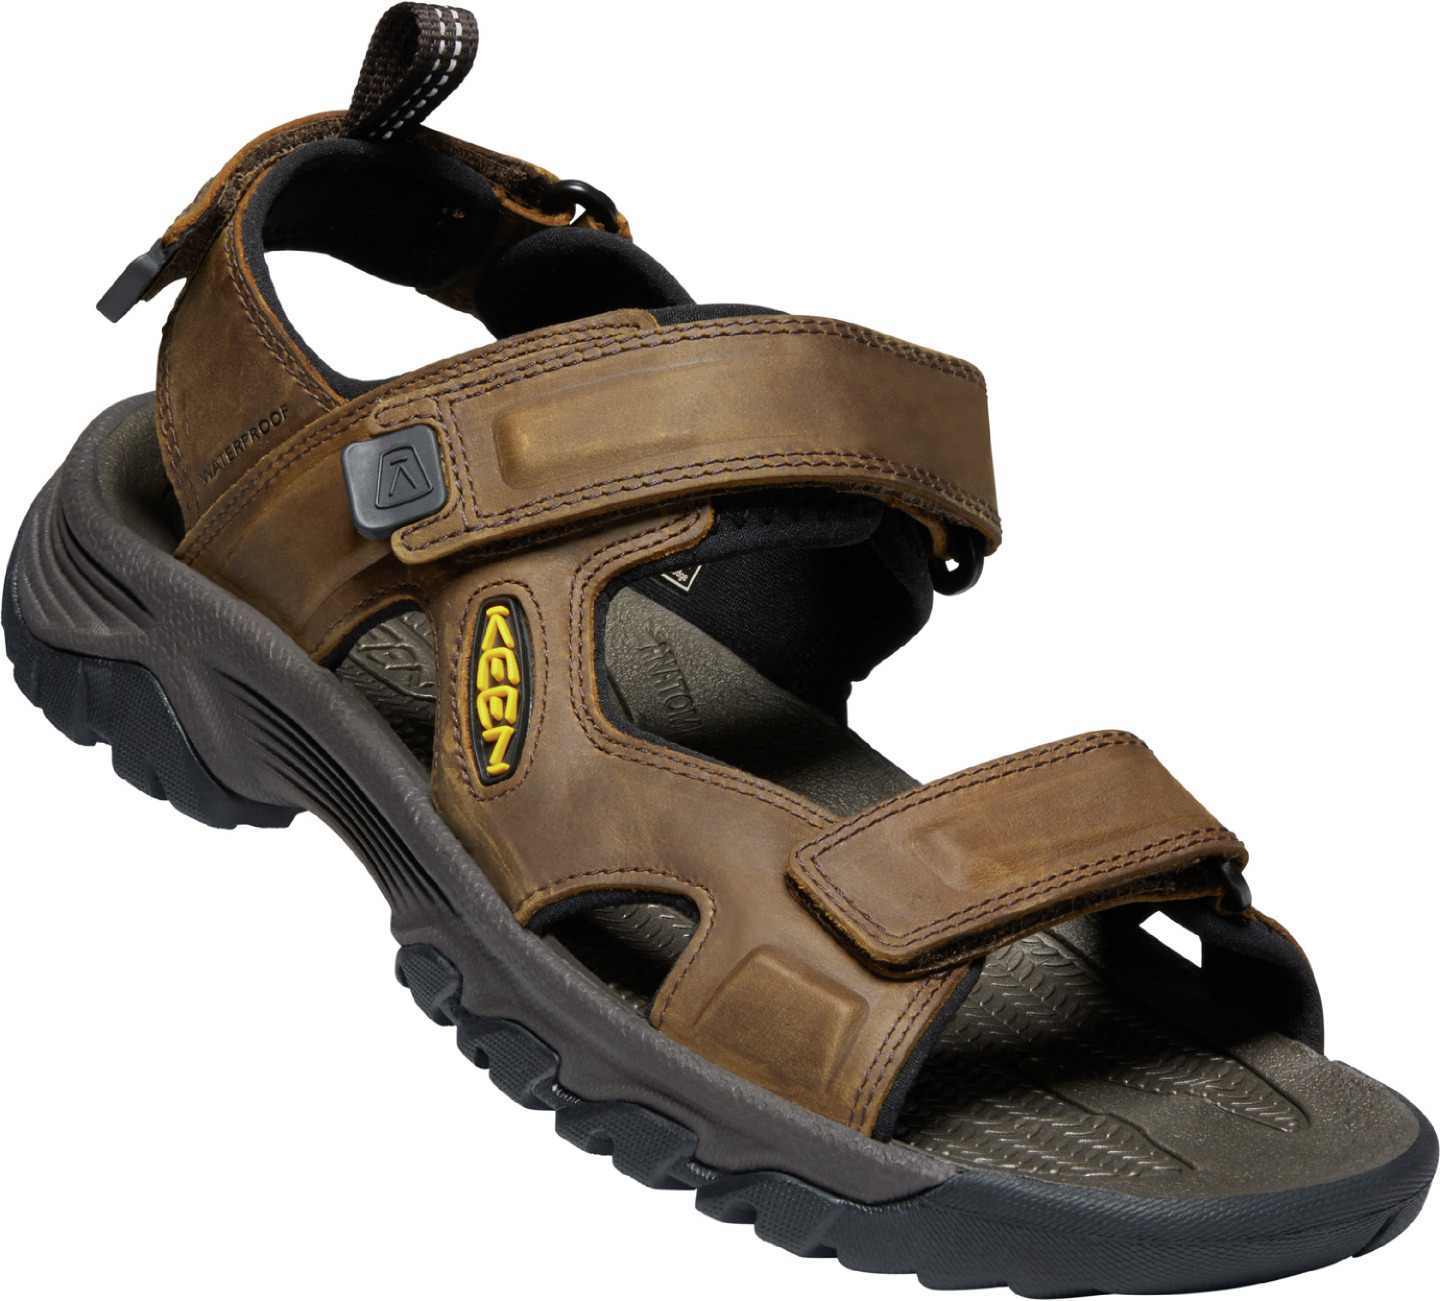 Keen pánské sandály Targhee III Open Toe Sandal Men - Bison/Mulch Barva: bison/mulch, Velikost: 9,5 UK (44 EU / 28,5 cm)